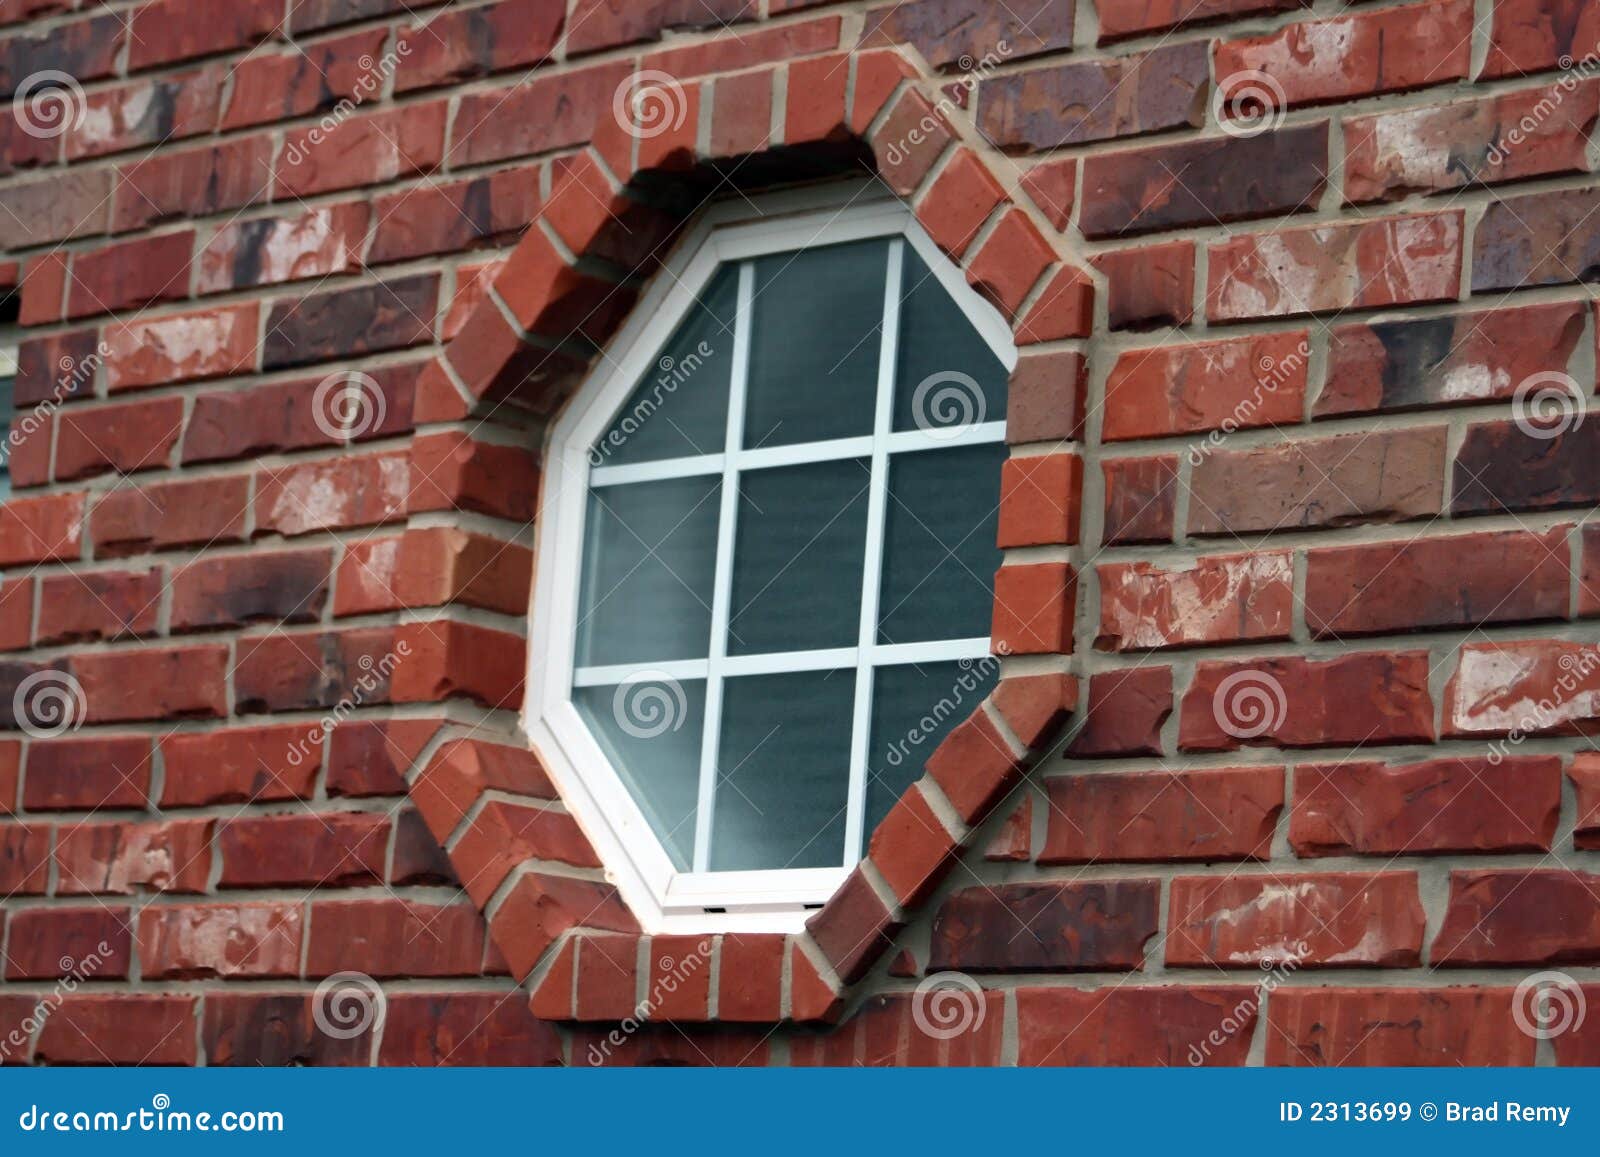 octagonal window in brick